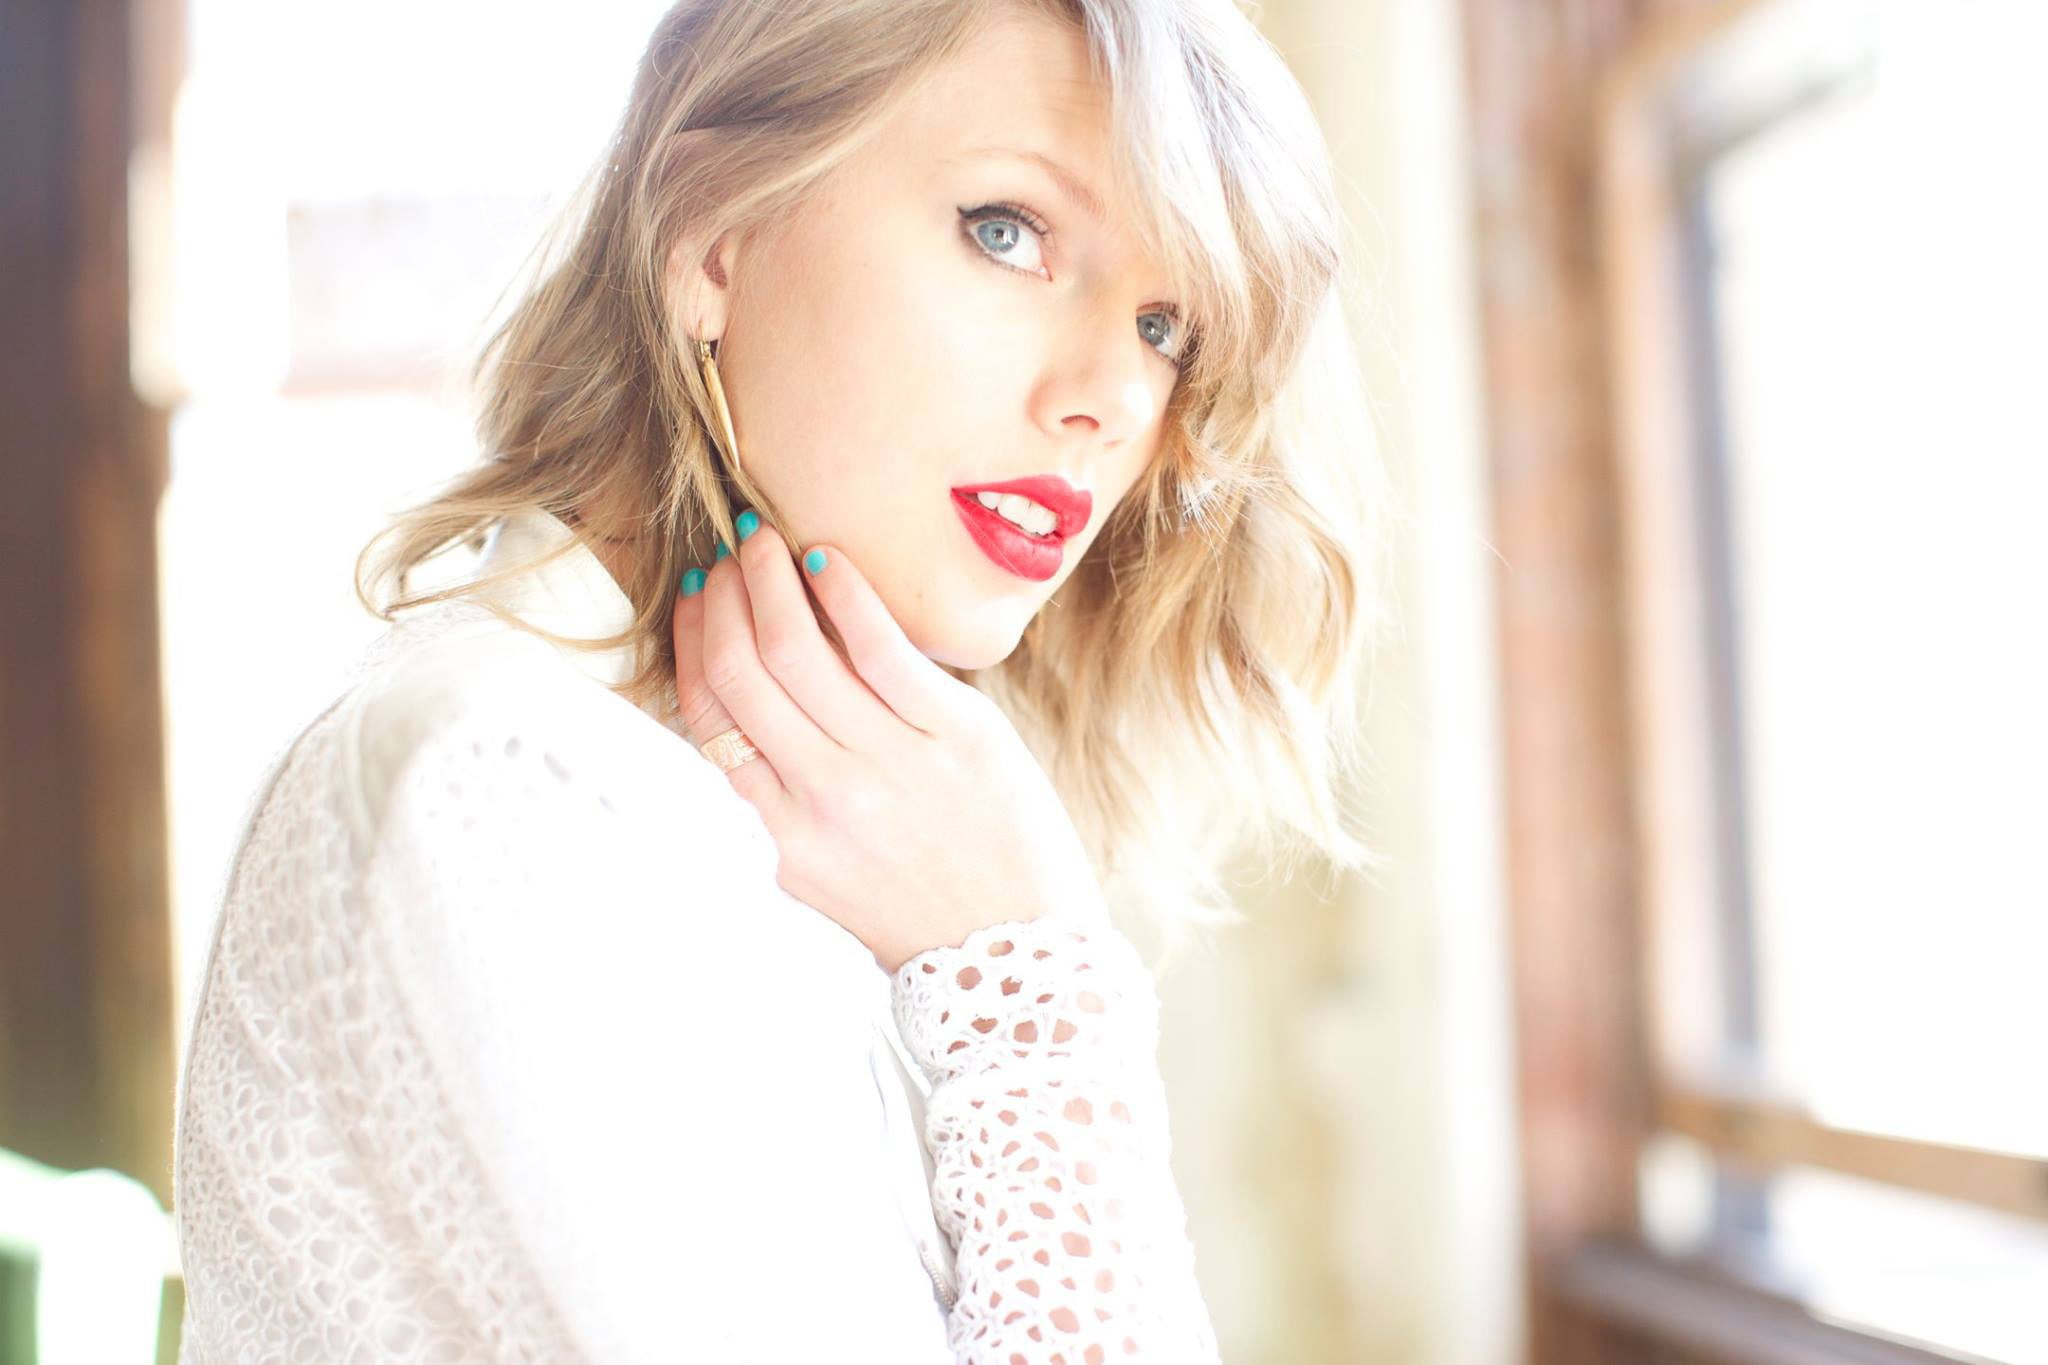 Taylor Swift 1989, the album photoshoot